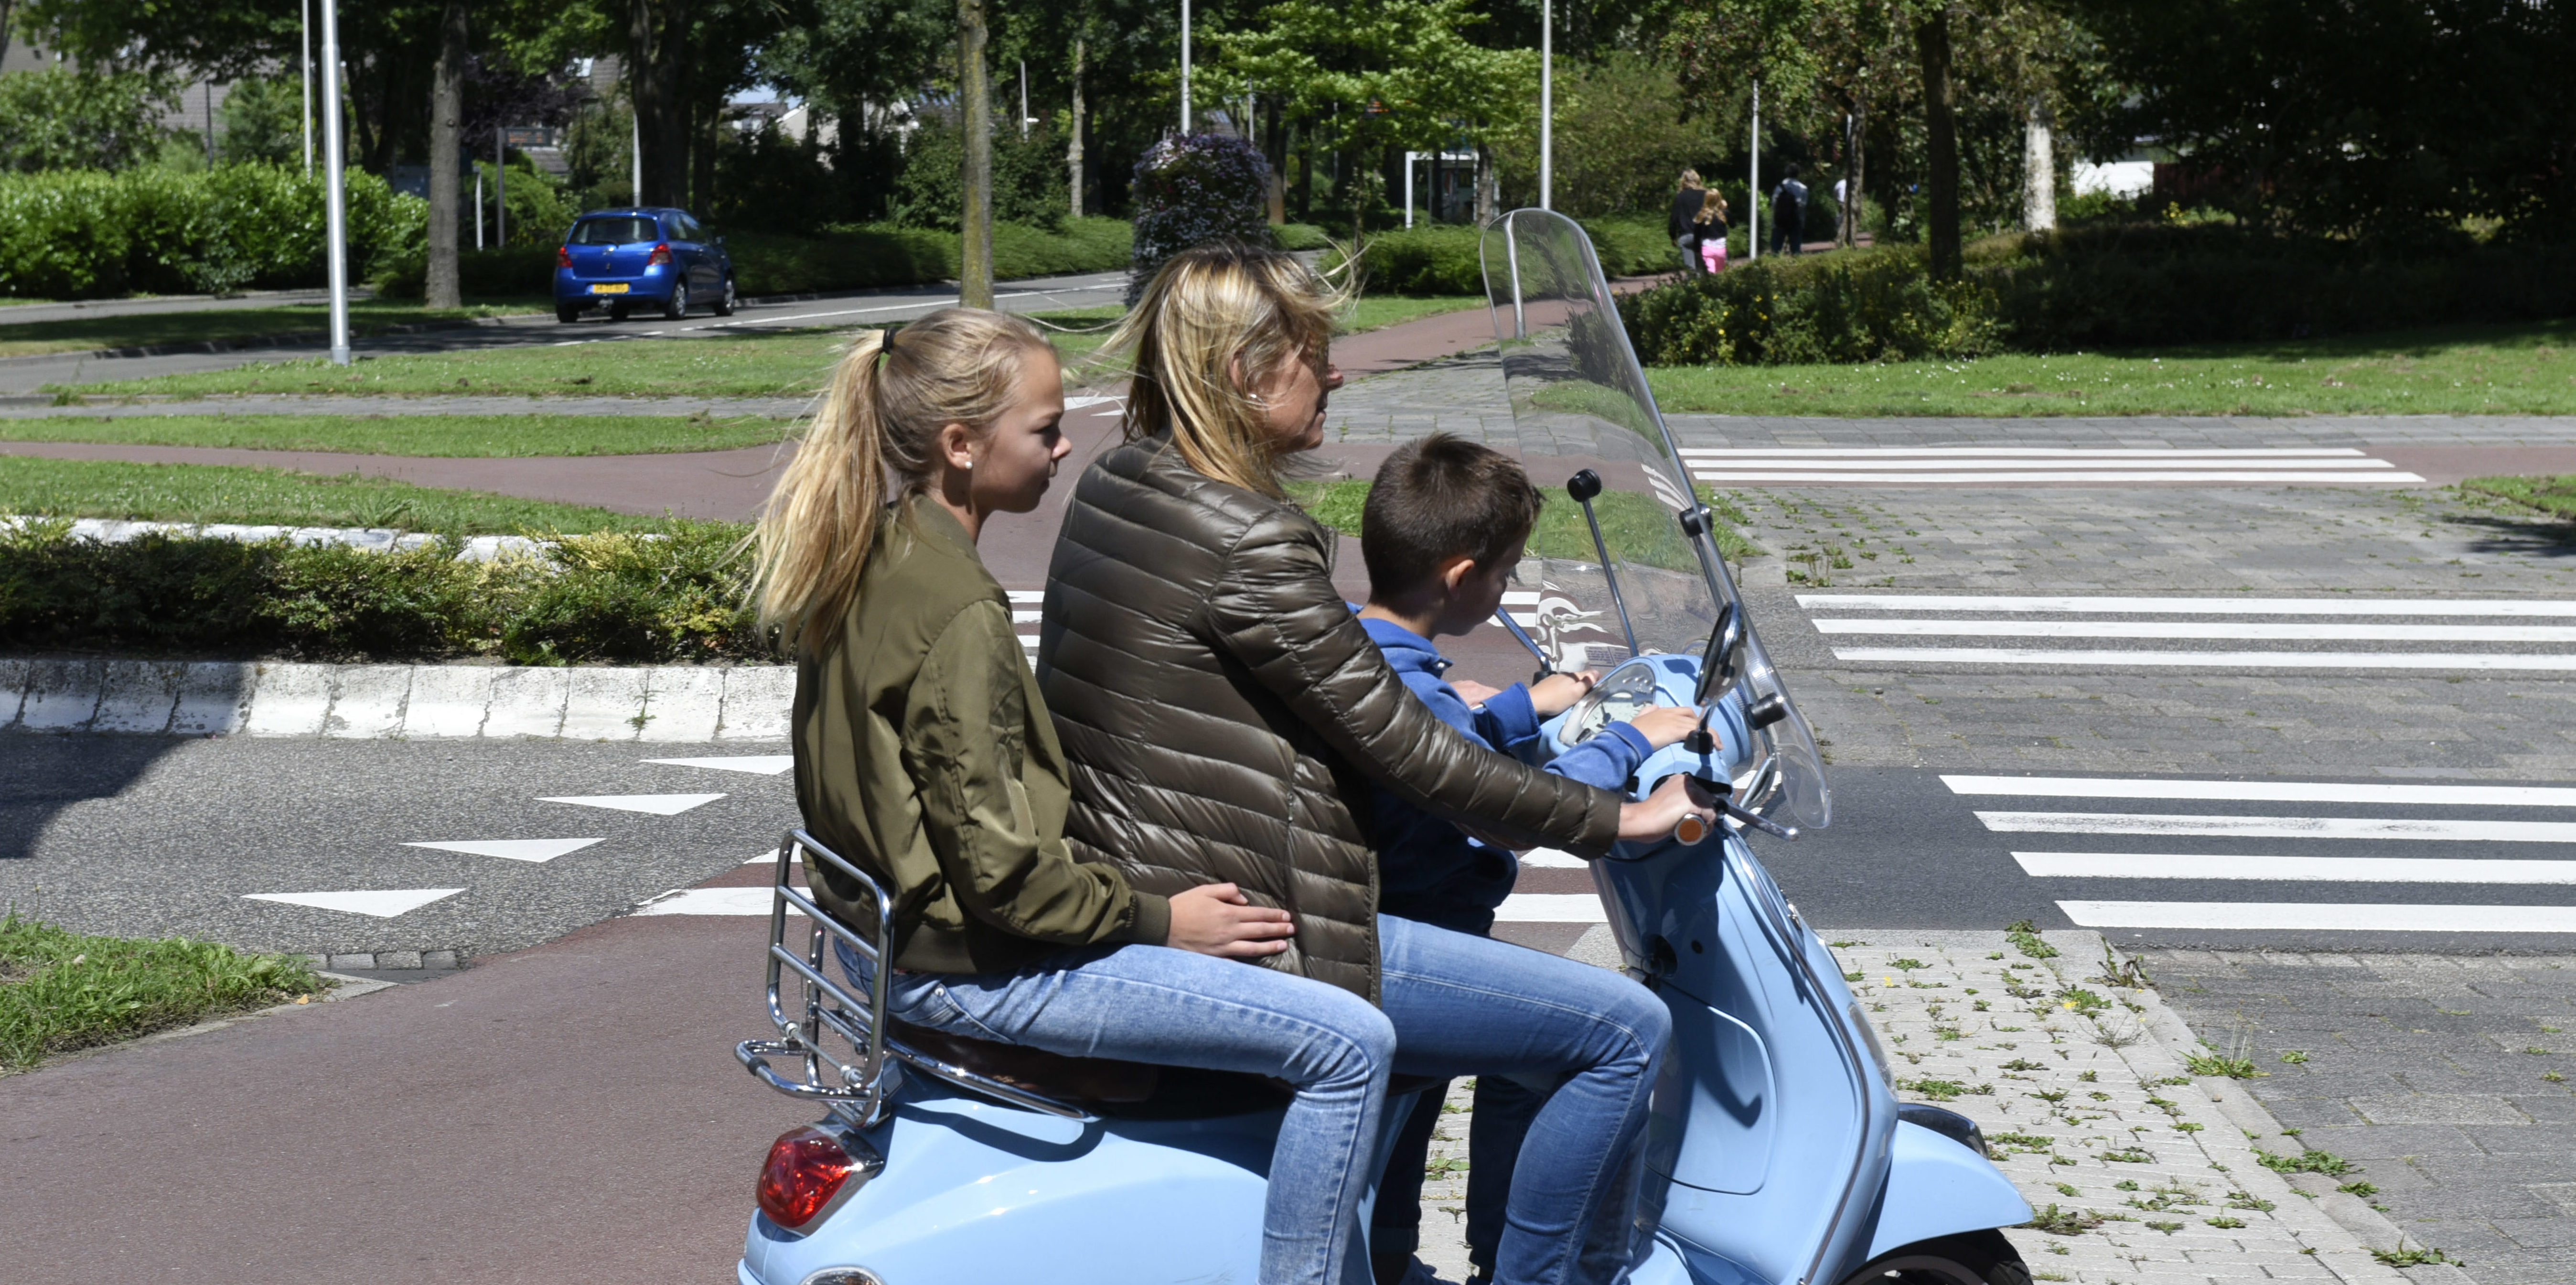 Light moped users to wear helmet in The Netherlands